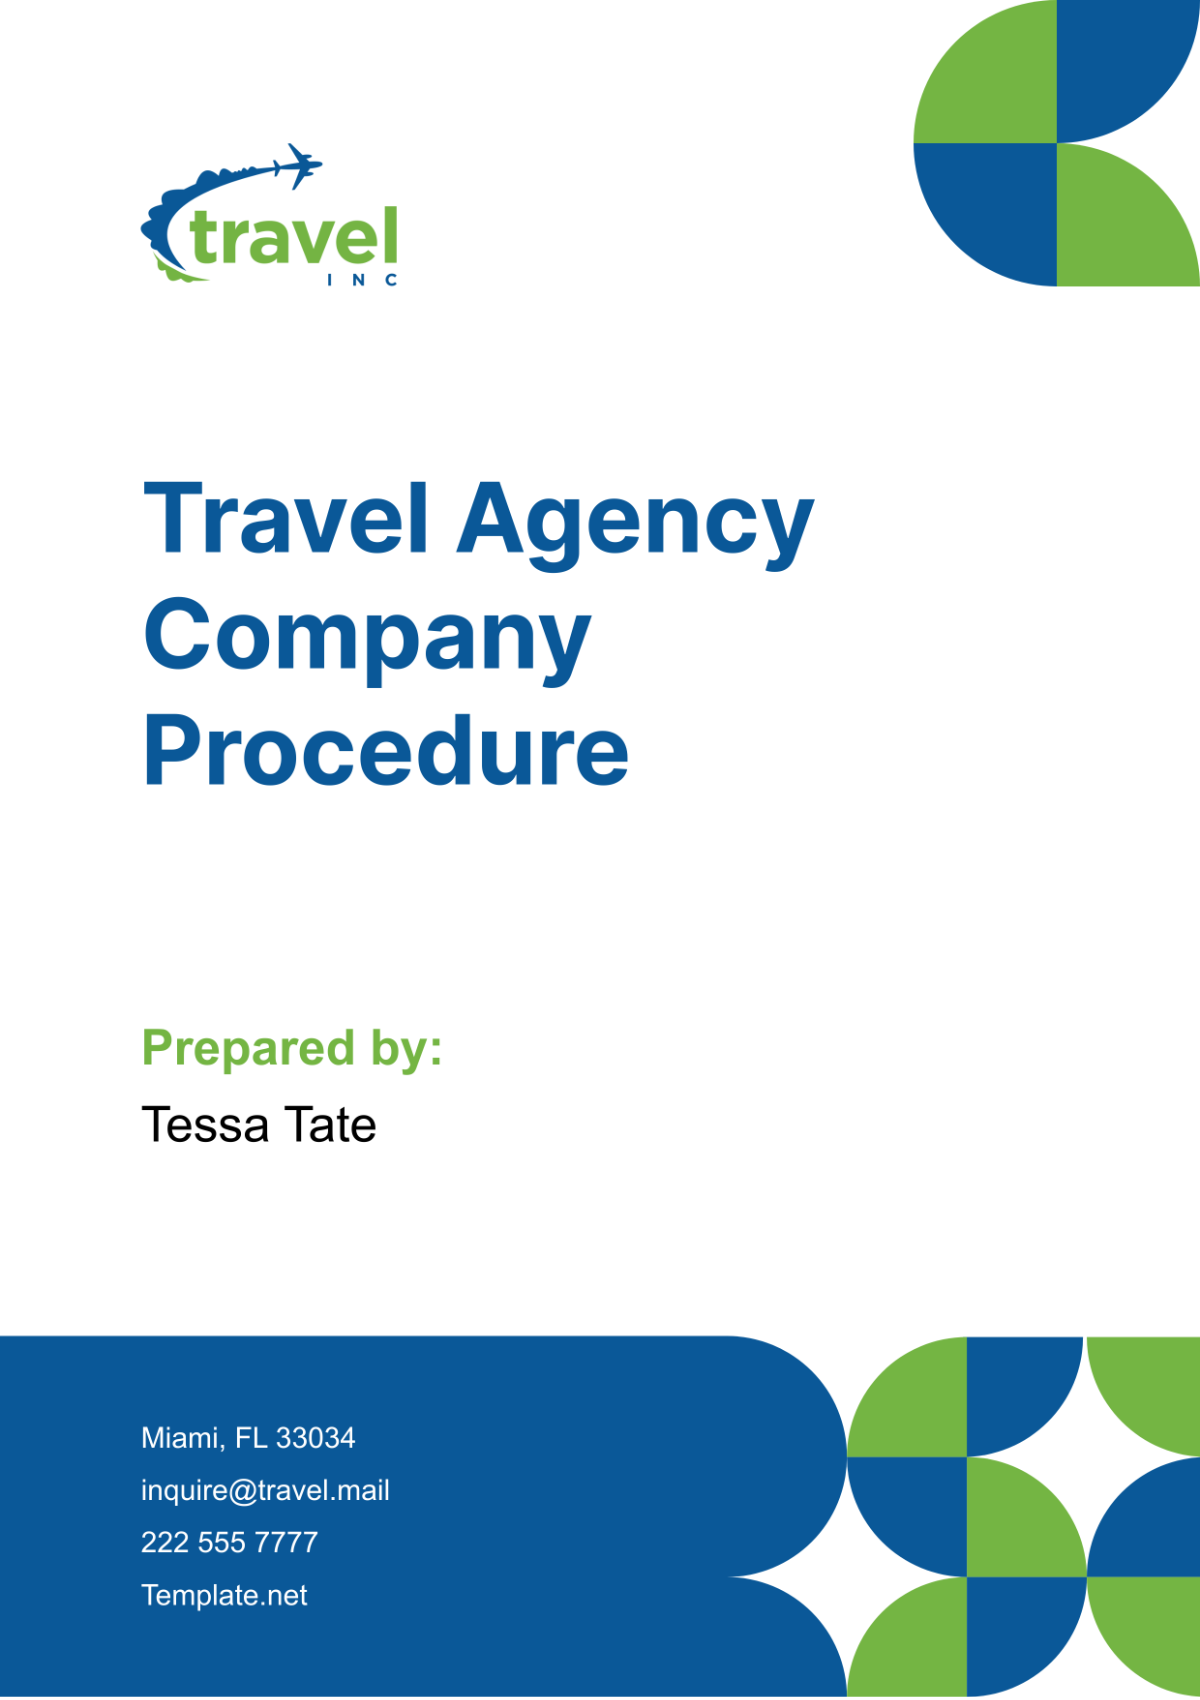 Travel Agency Company Procedure Template